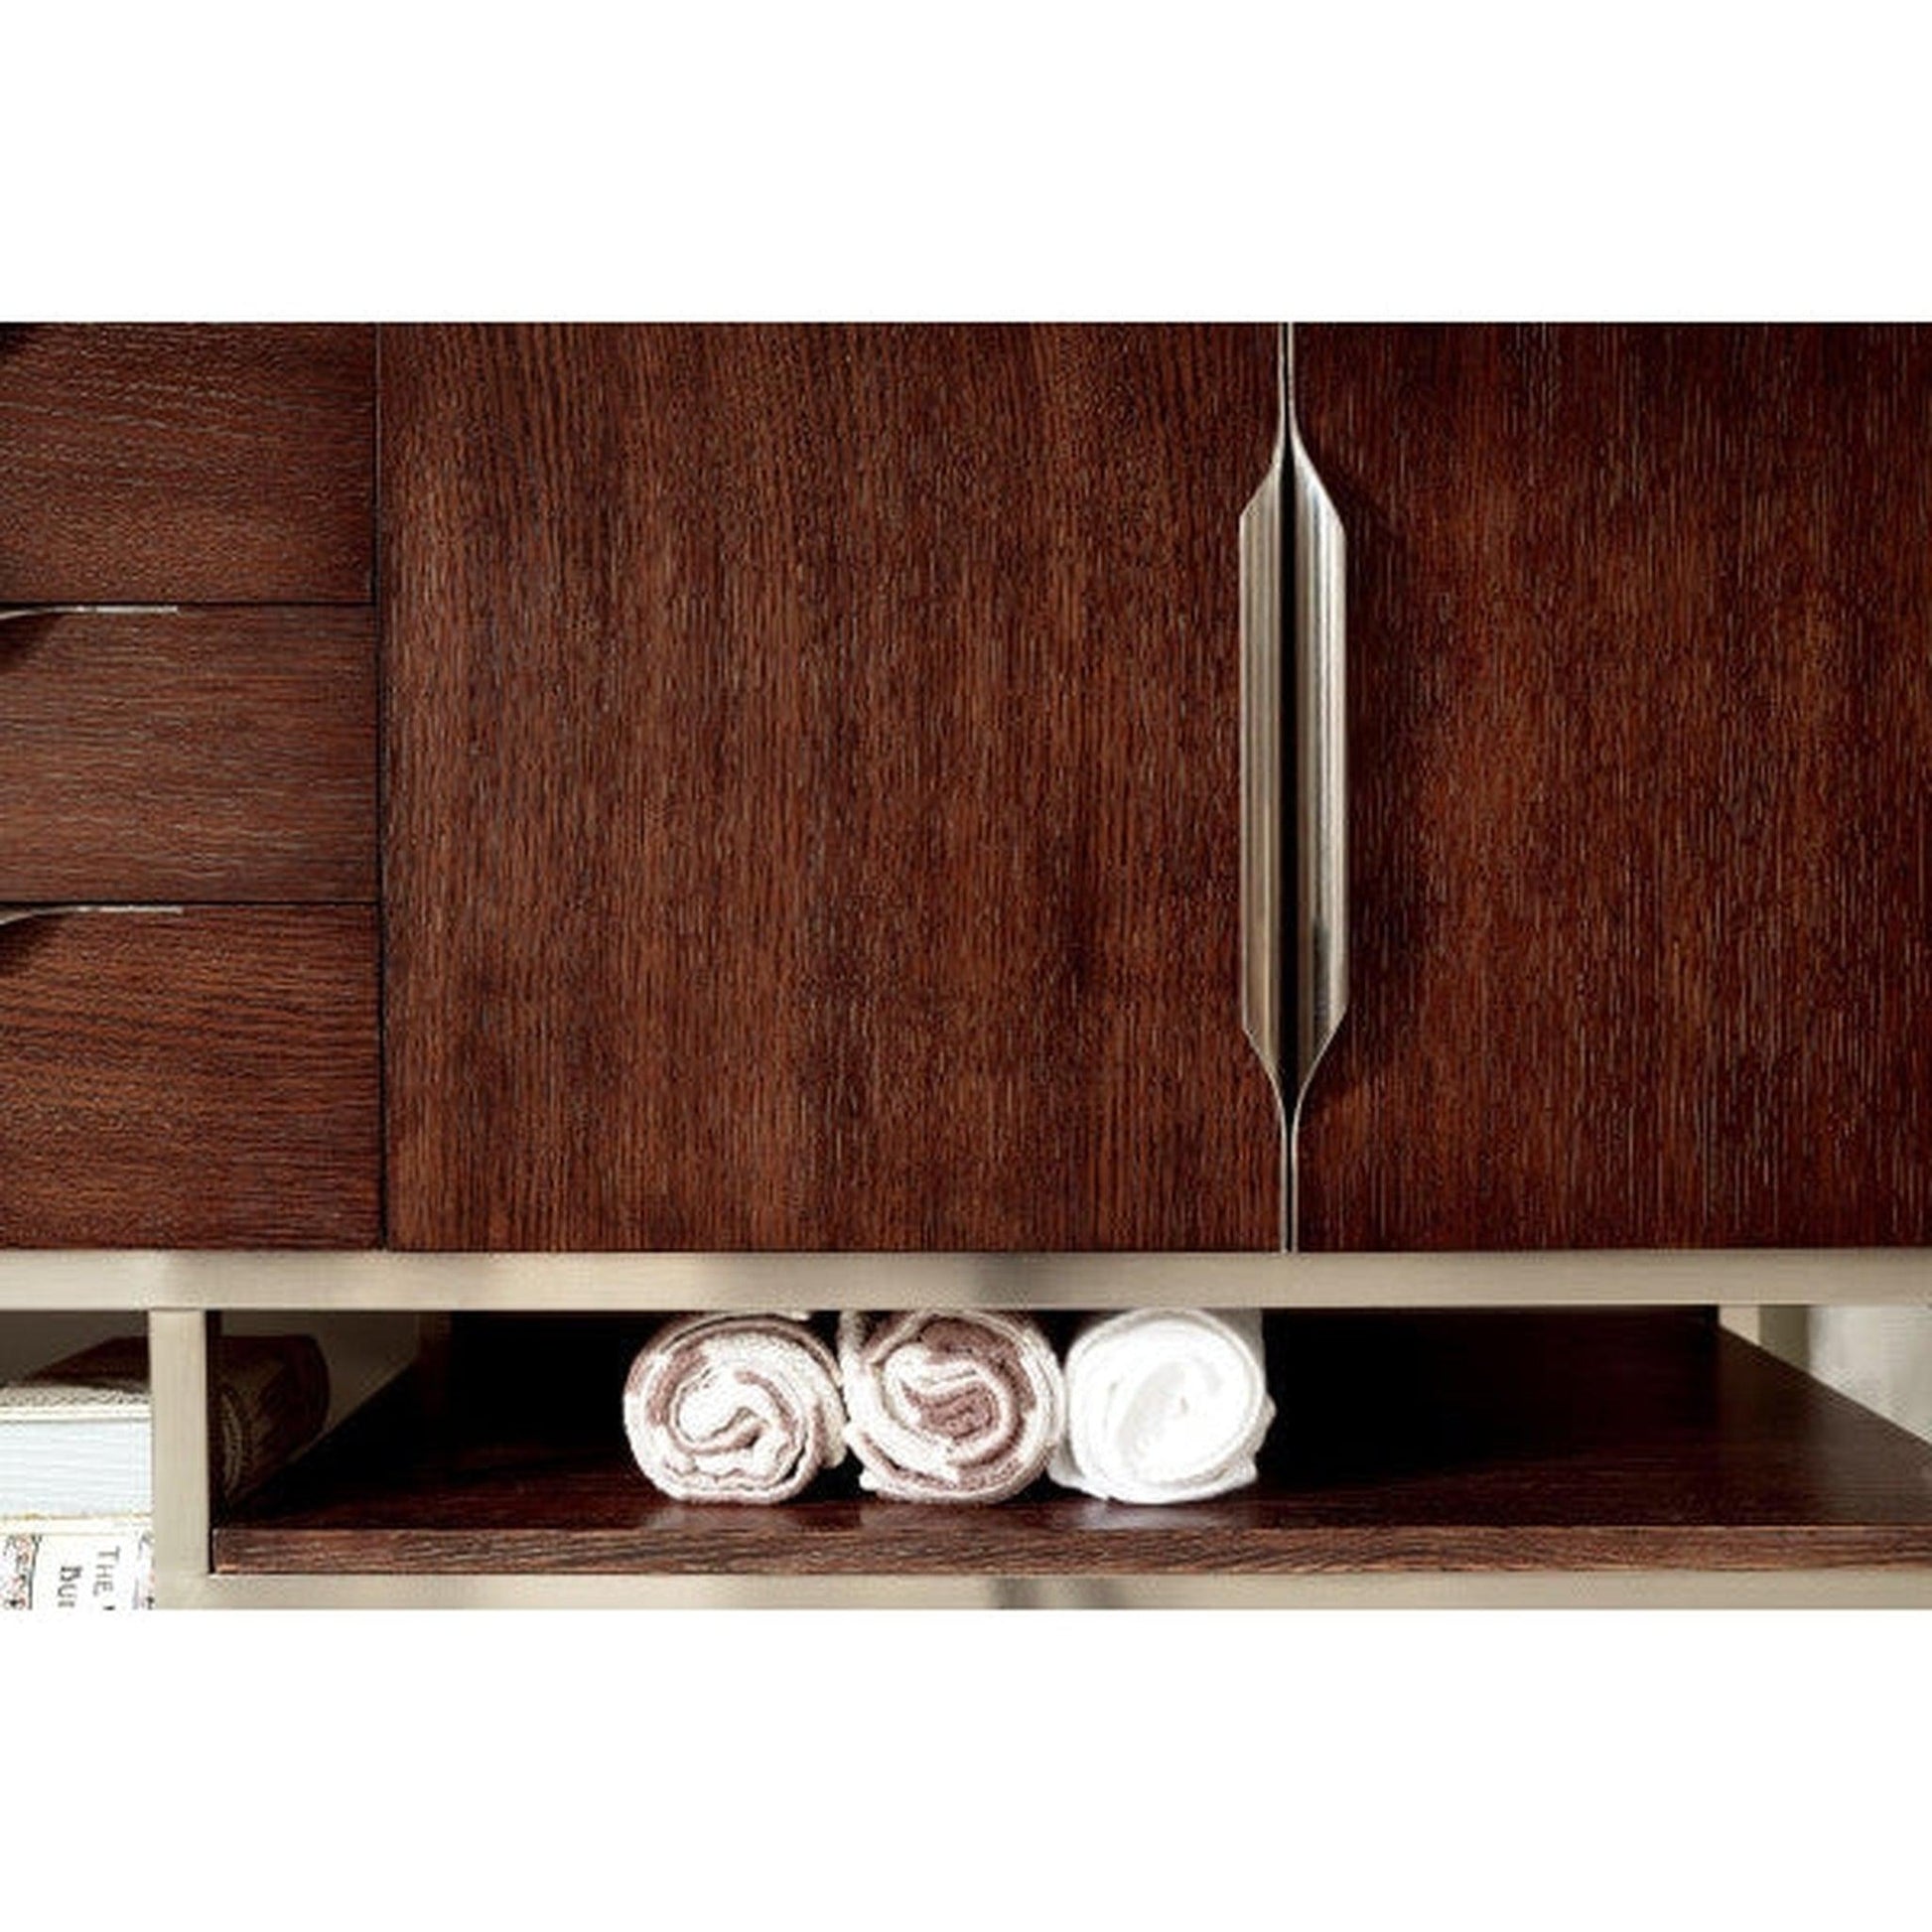 James Martin Columbia 73" Single Coffee Oak Bathroom Vanity With 6" Glossy White Composite Countertop